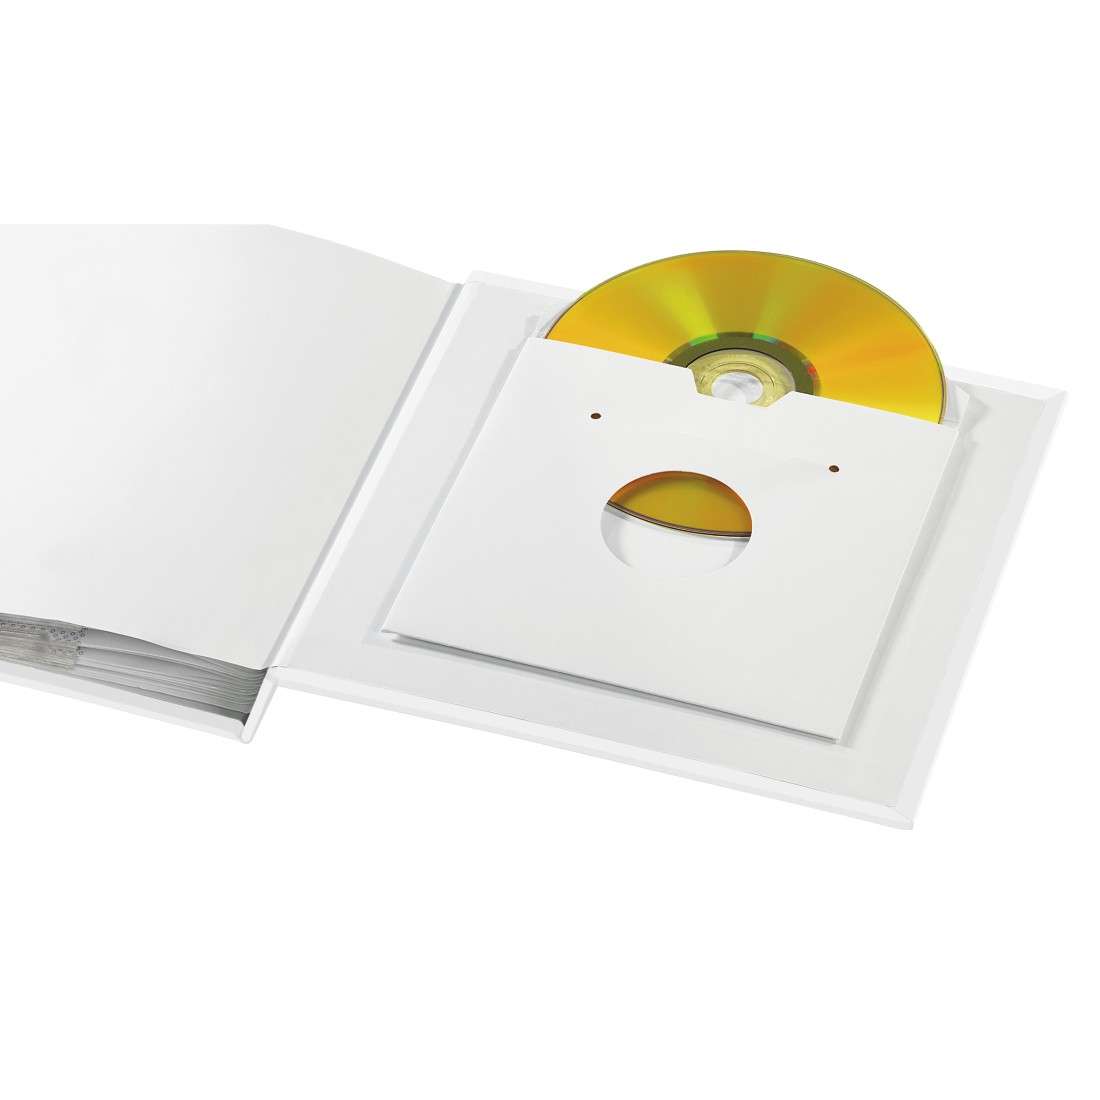 Memo-Album Skies, für 200 Fotos im Format 10x15 cm, Grau